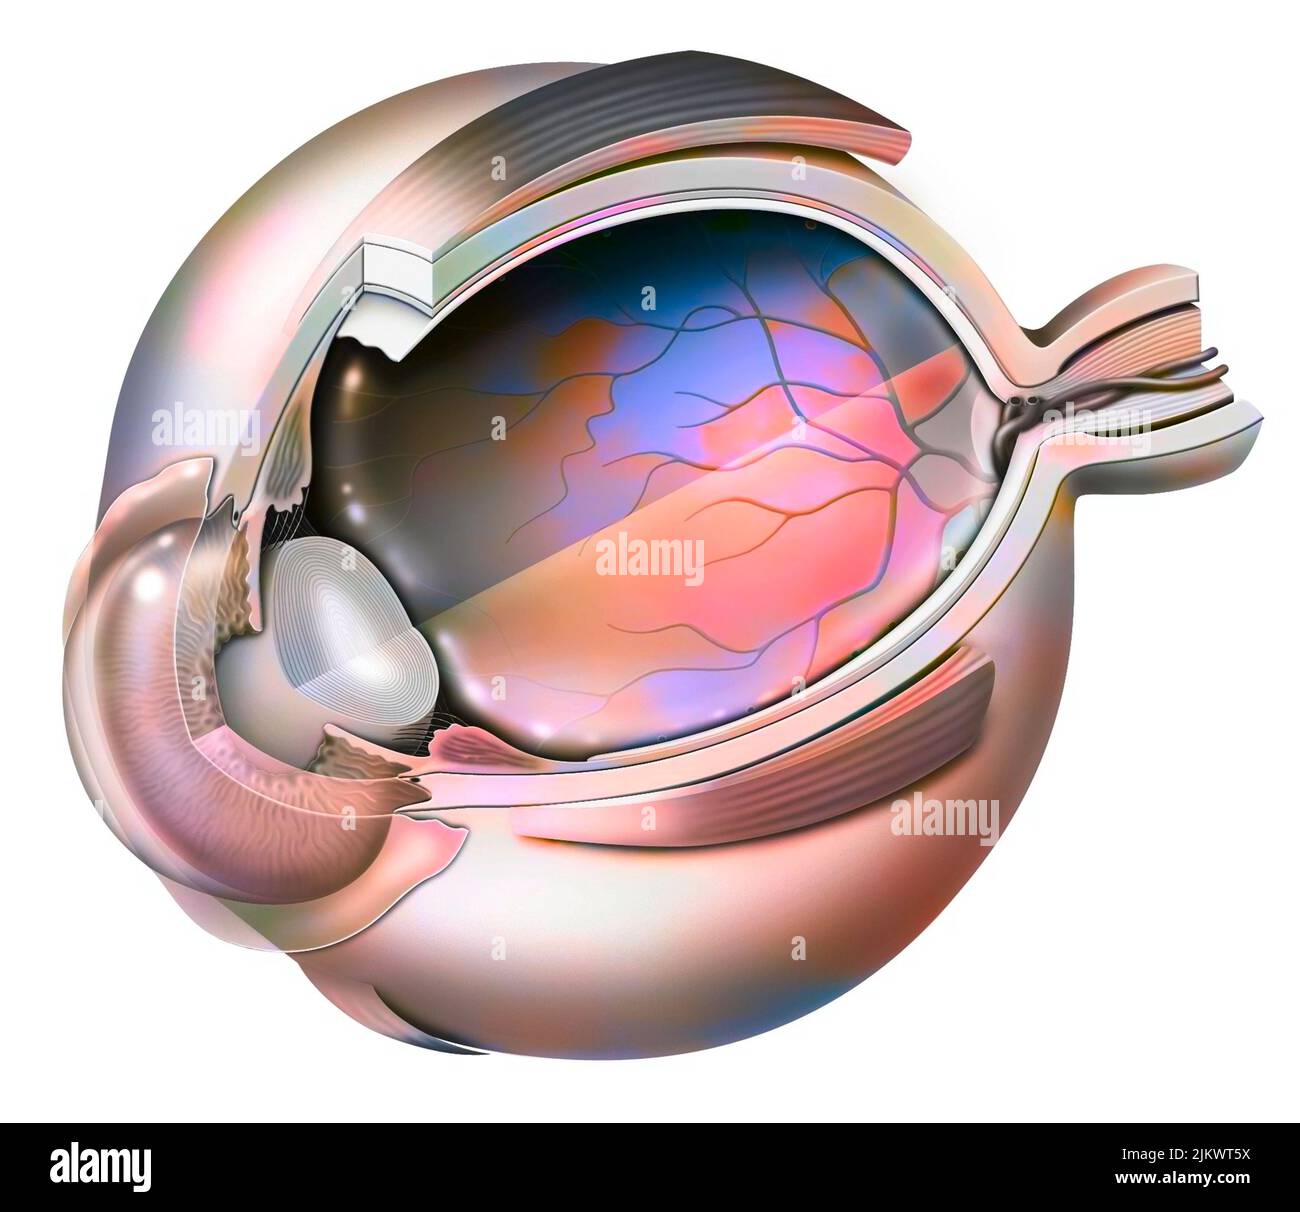 Eye anatomy with vitreous humor transparency effect. Stock Photo